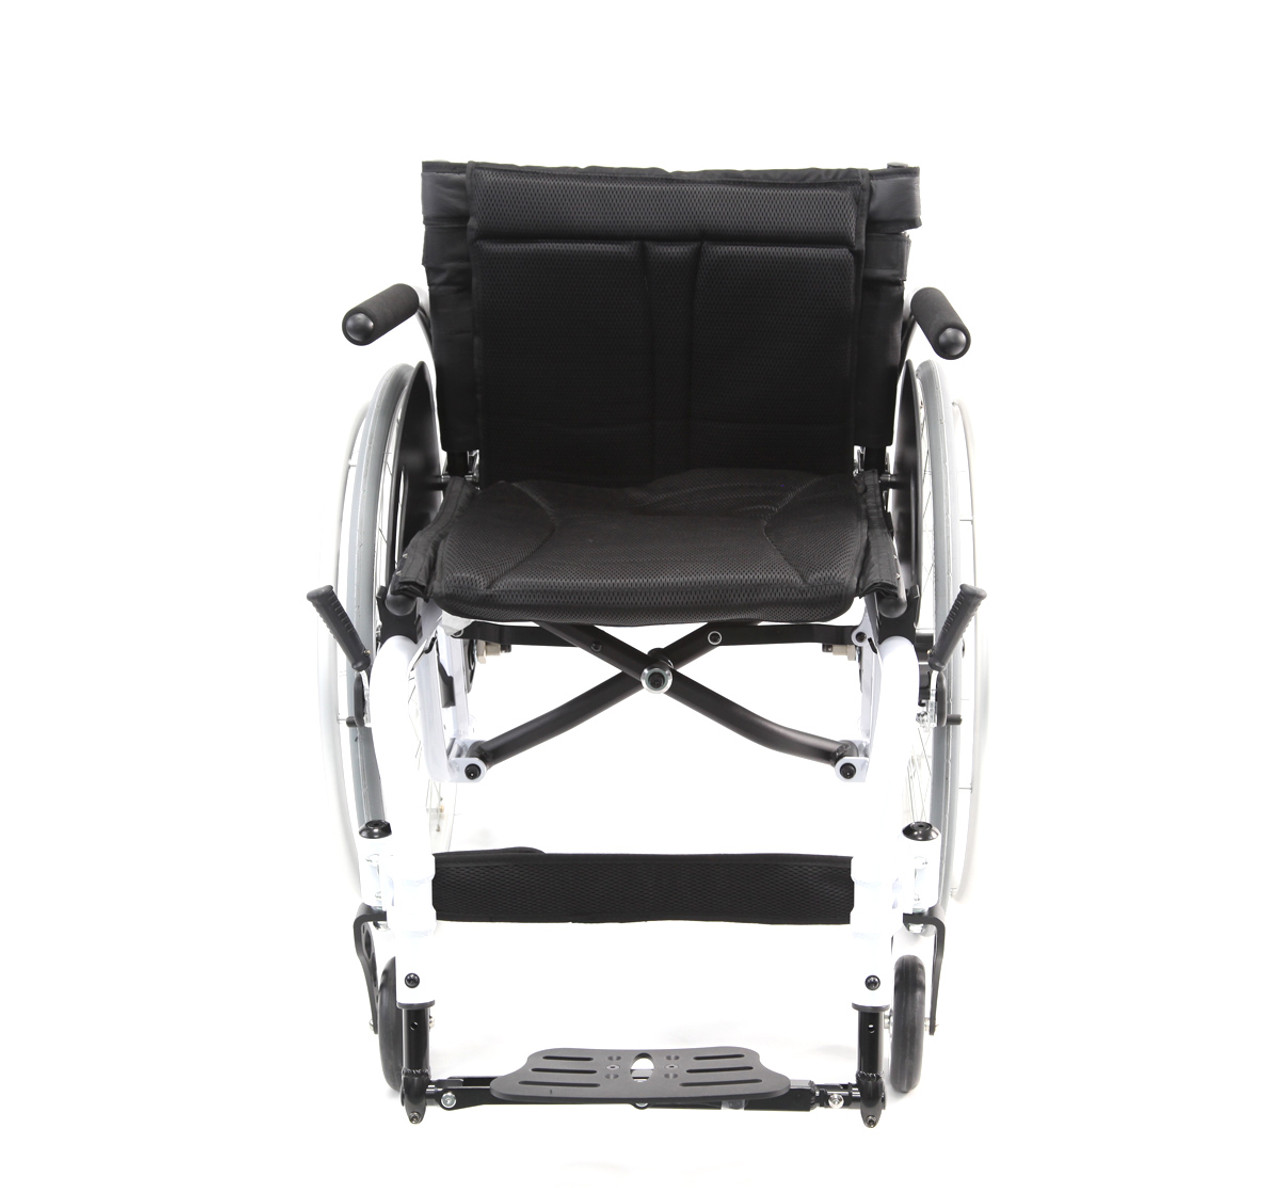 S-ERGO ATX 15.4 Lightweight Wheelchair by Karman